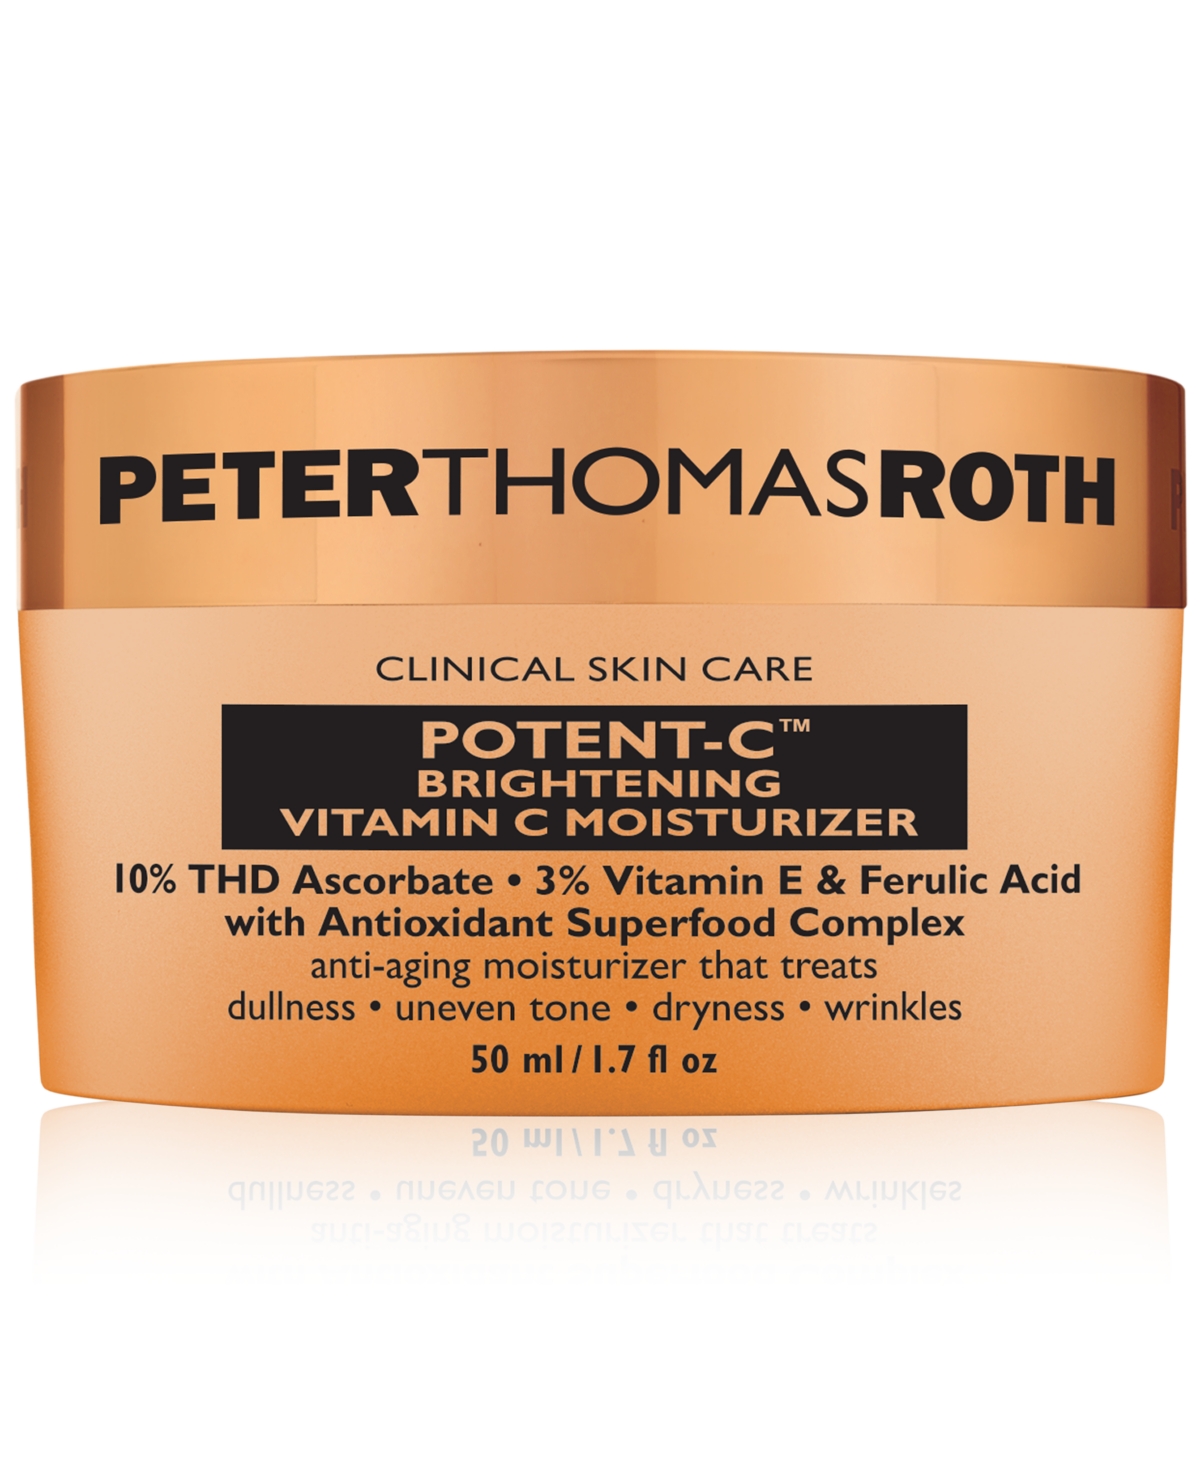 Peter Thomas Roth Potent-c Brightening Vitamin C Moisturizer, 1.7 Oz.